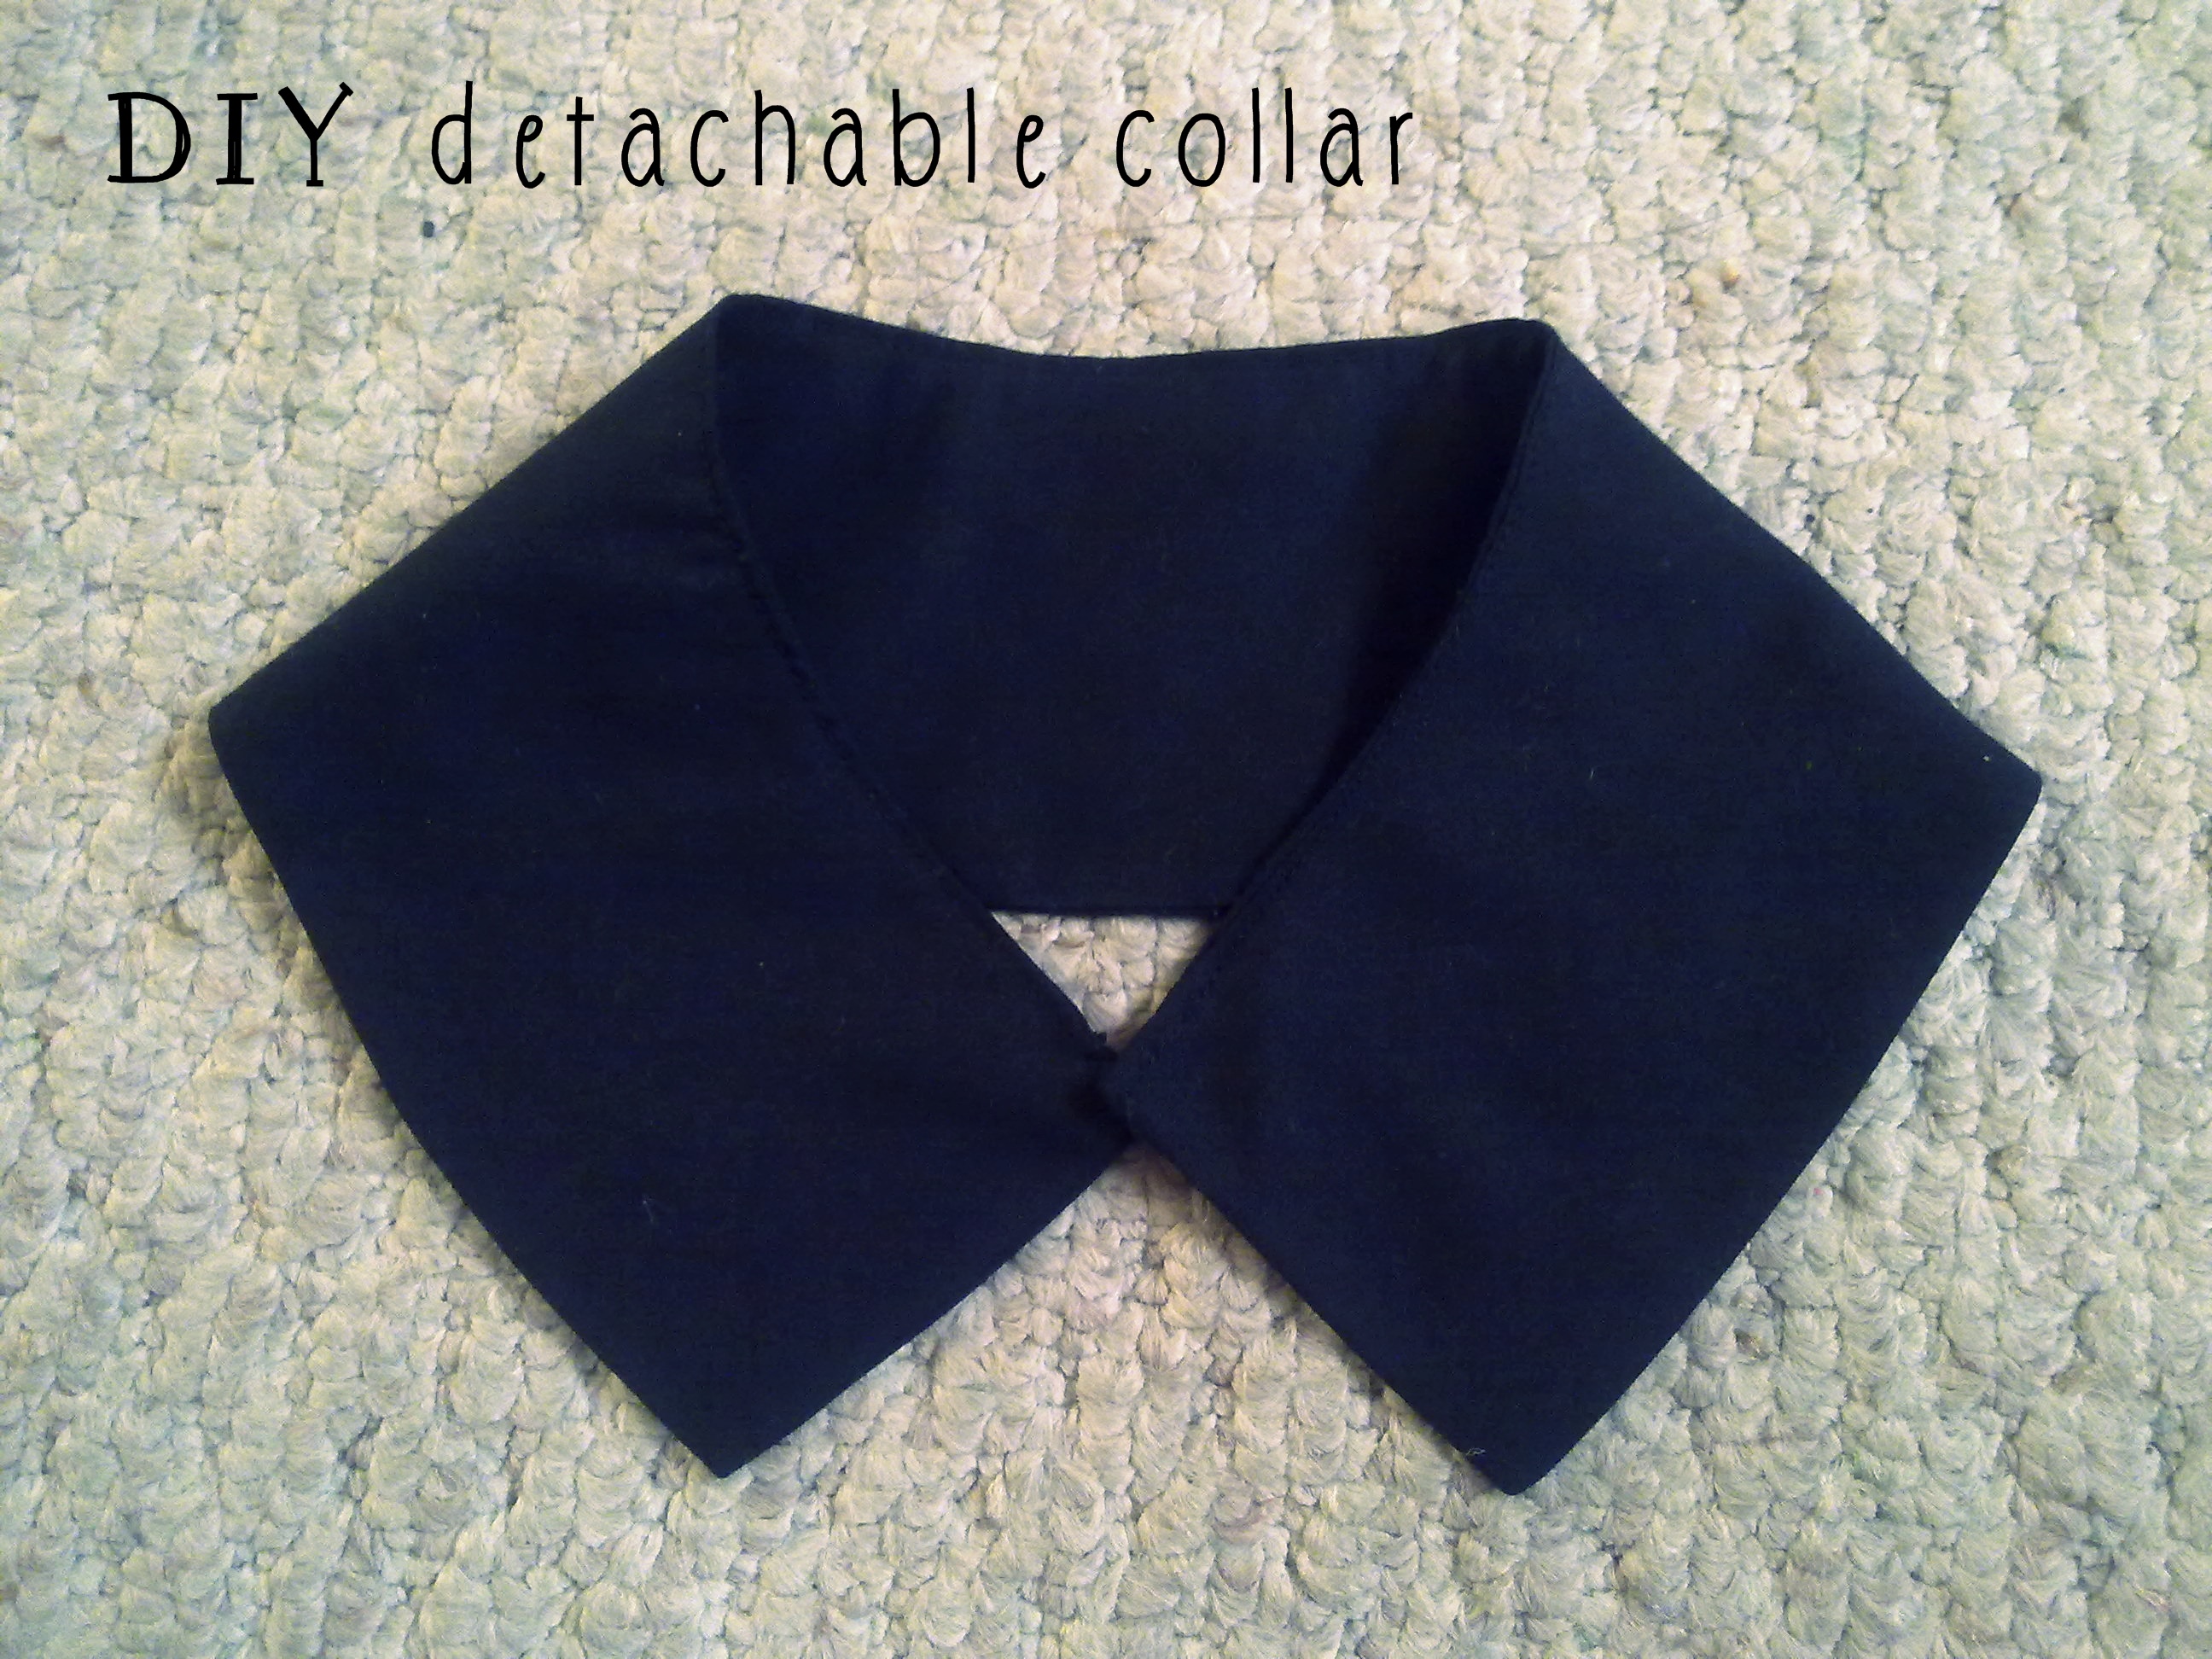 DIY detachable collar Sewing Projects BurdaStyle com